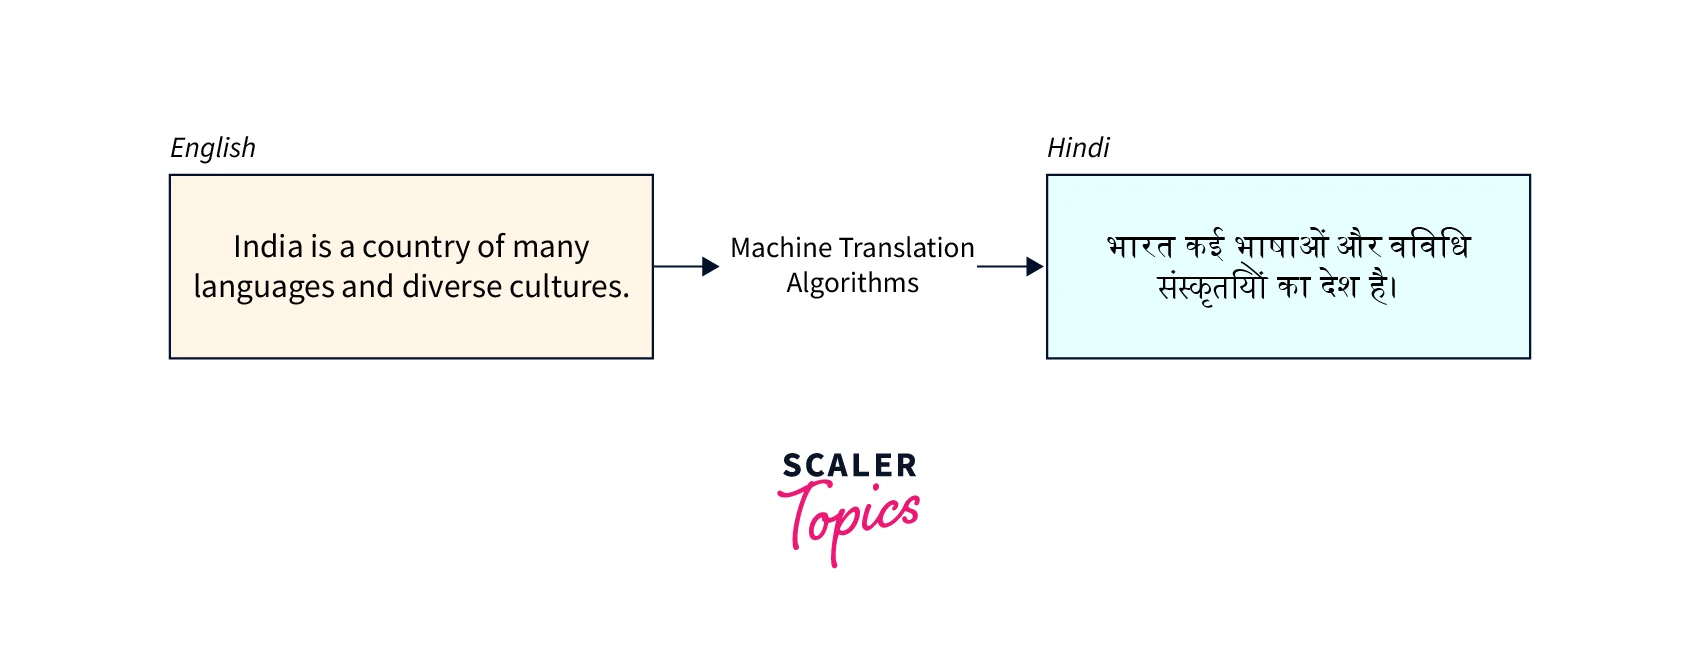 Illustration for machine translation from English to Hindi